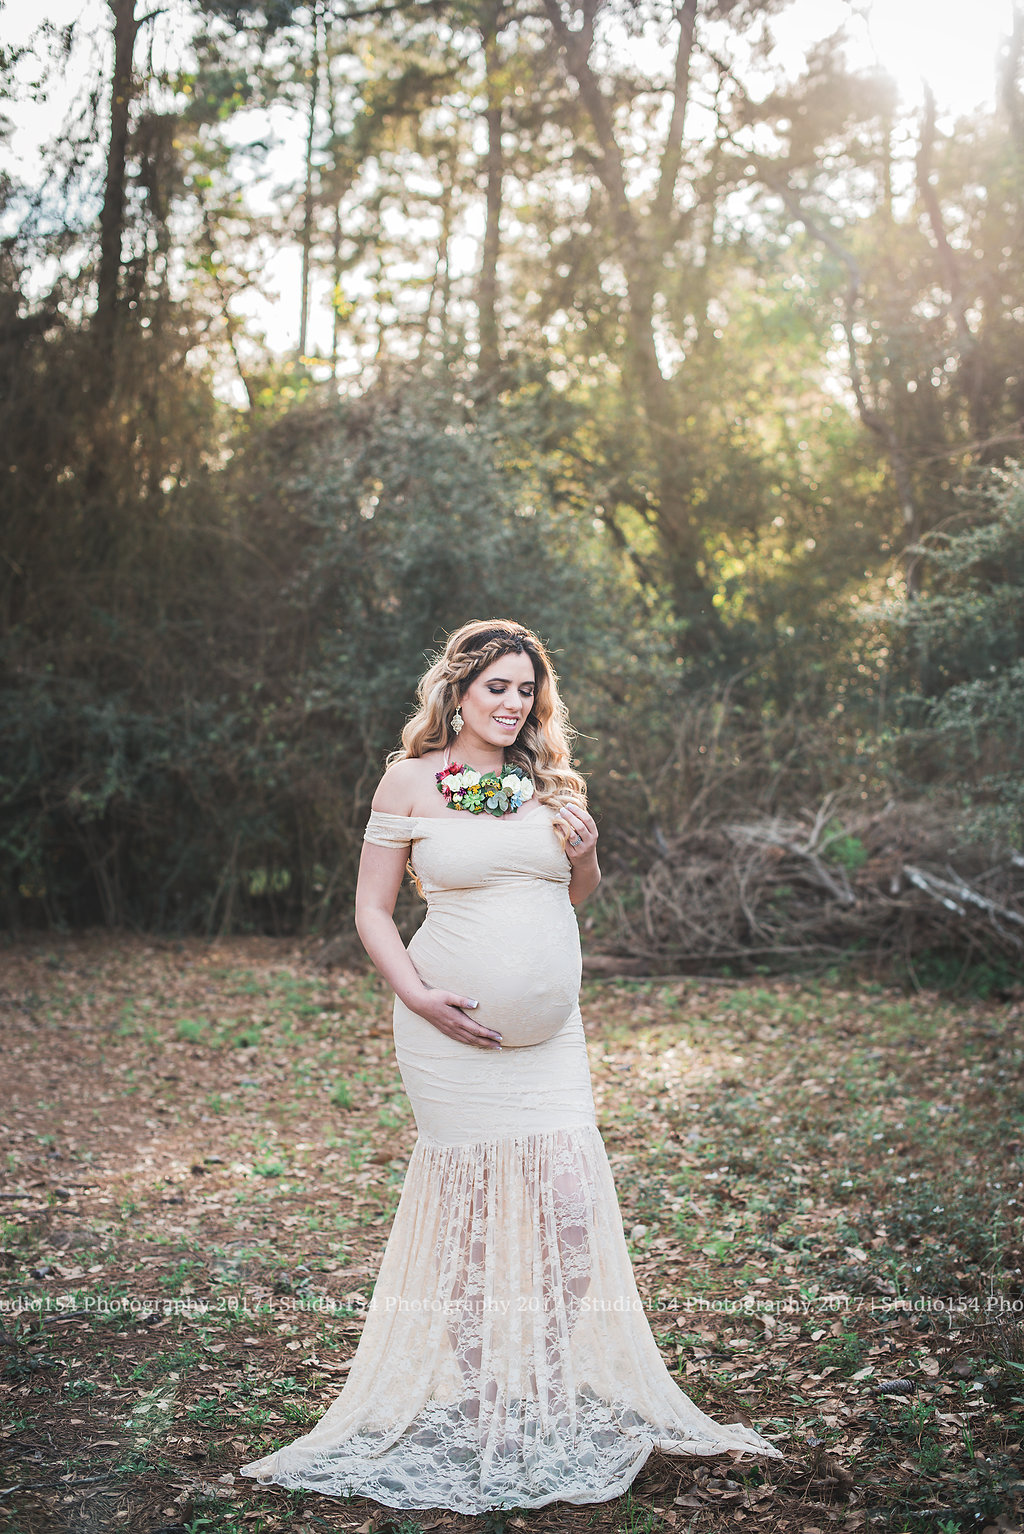 My Rainbow baby Maternity shoot. - The Ashmores Blog